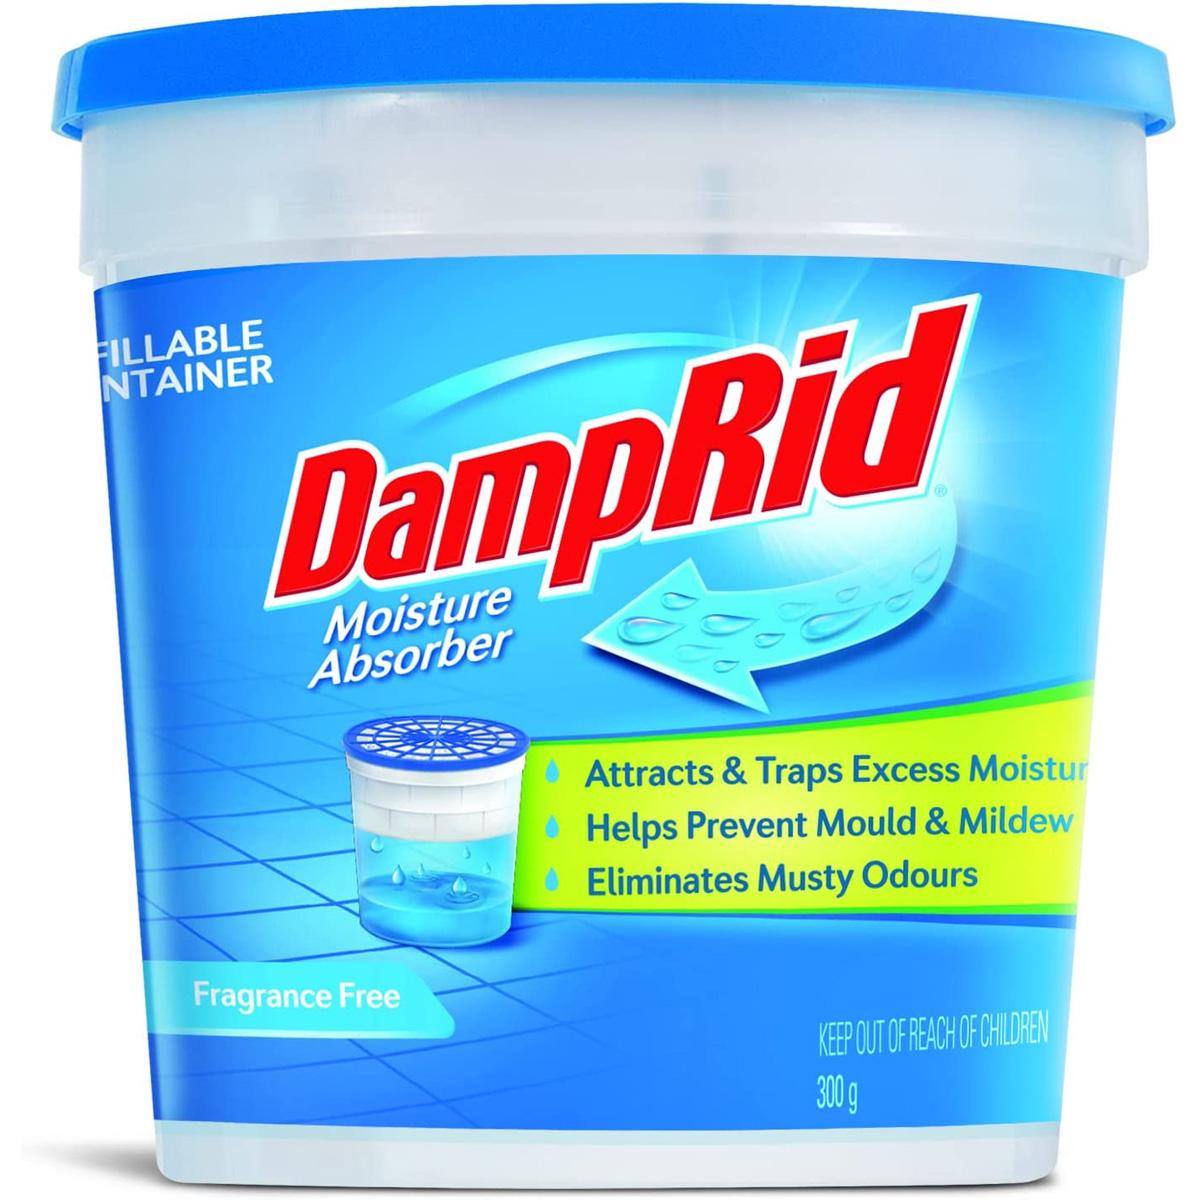 DampRid Refillable Moisture Absorber for $2.87 Shipped